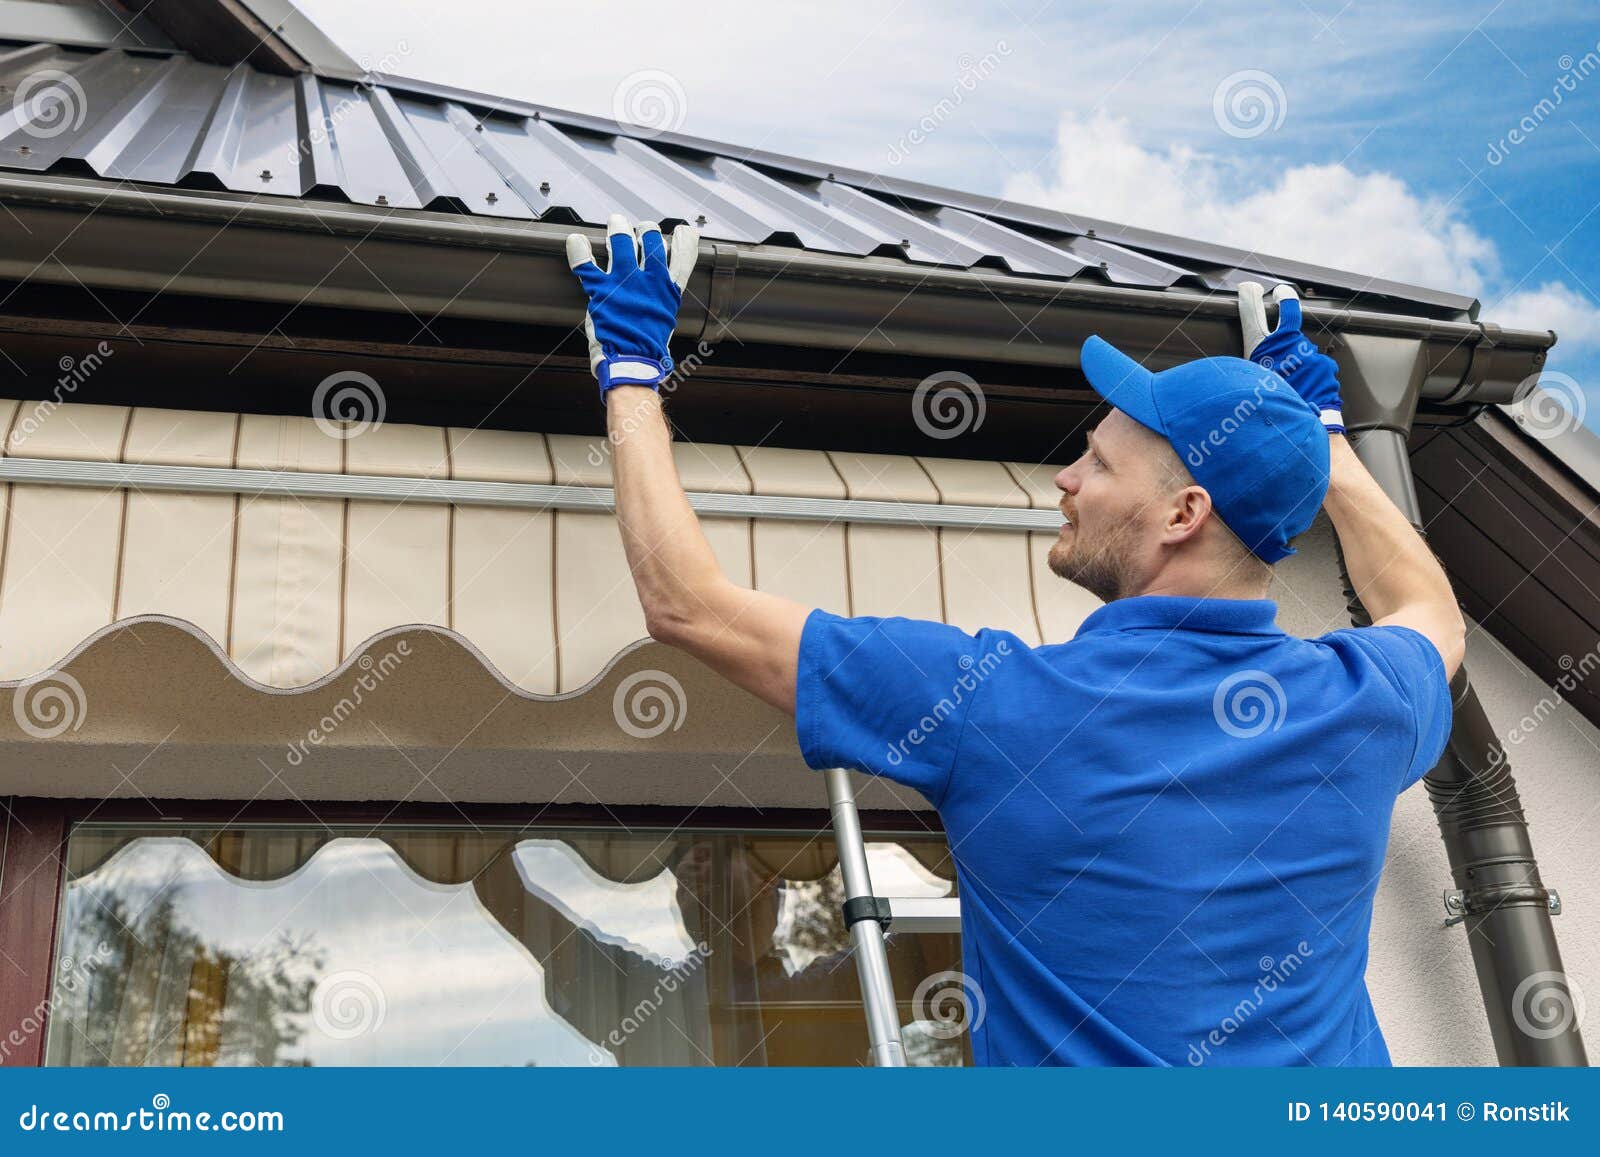 man installing house roof gutter system